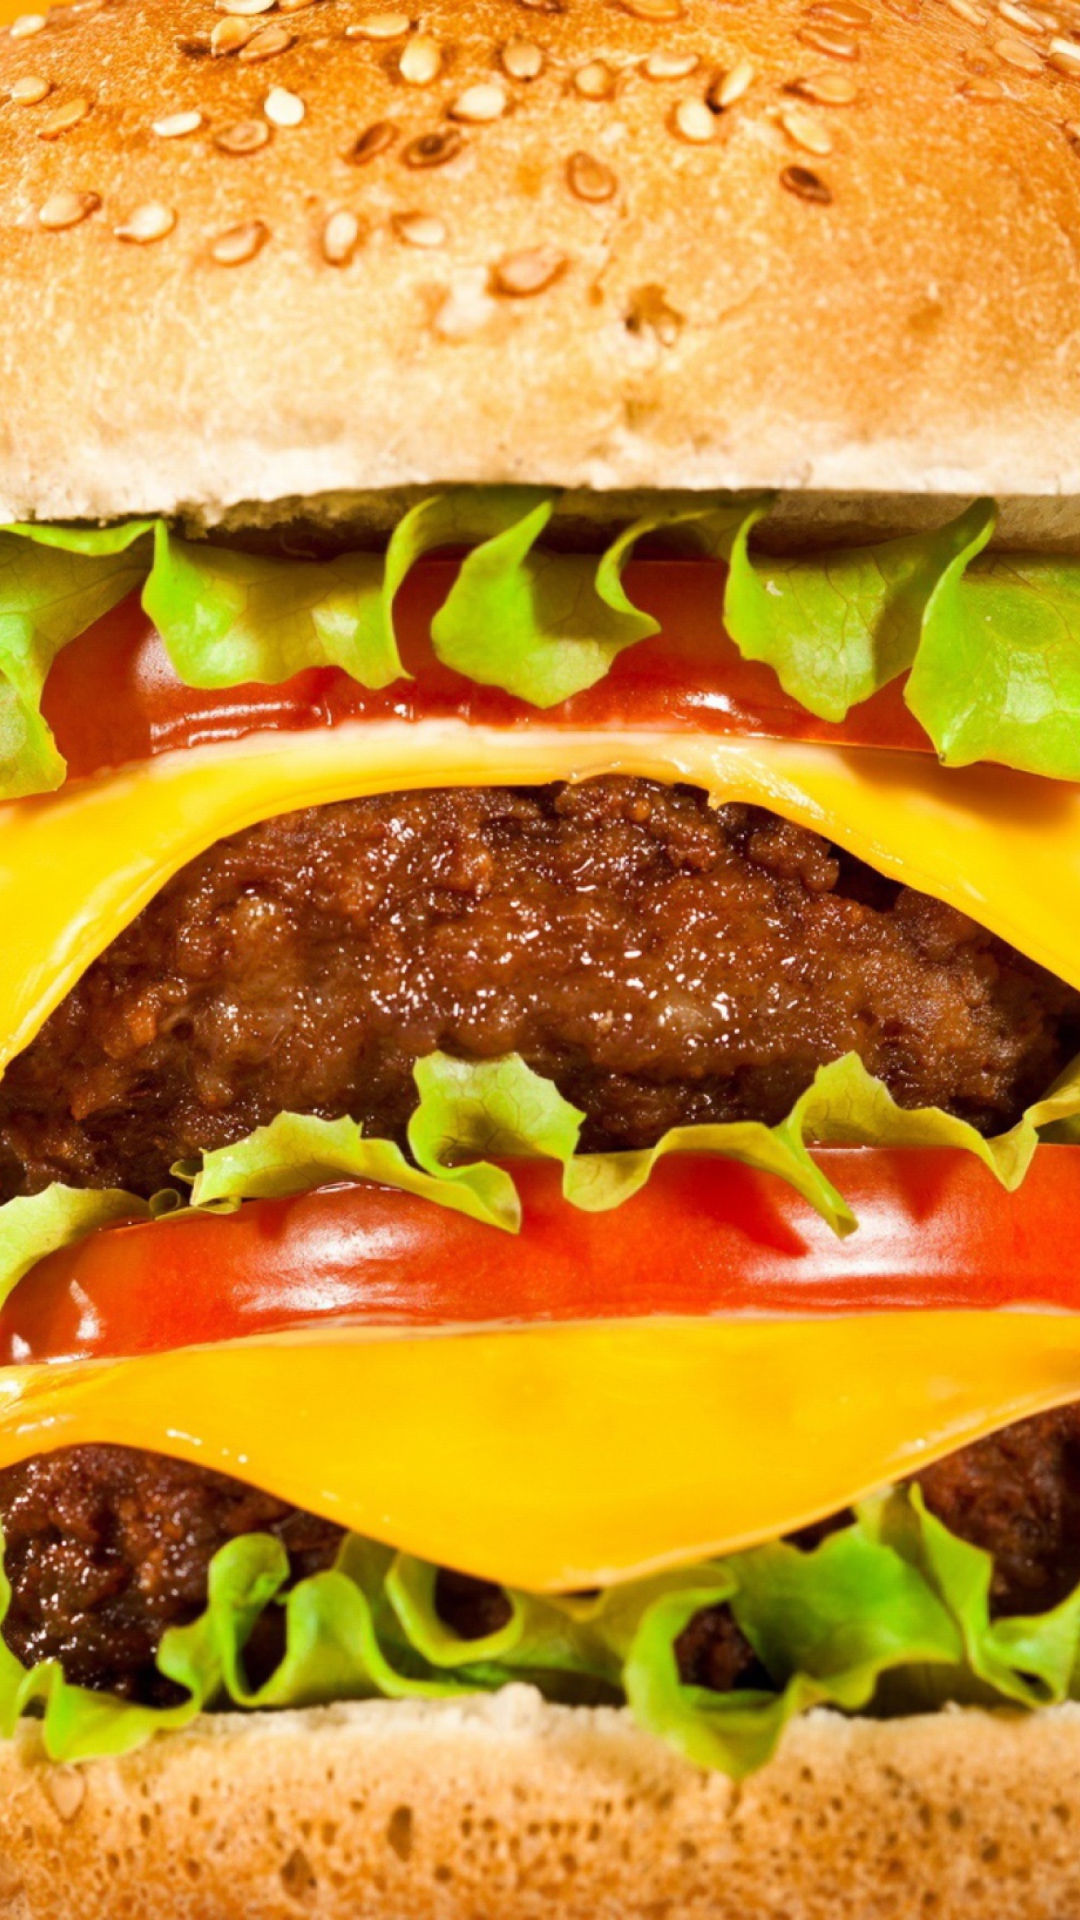 Double Cheeseburger wallpaper 1080x1920